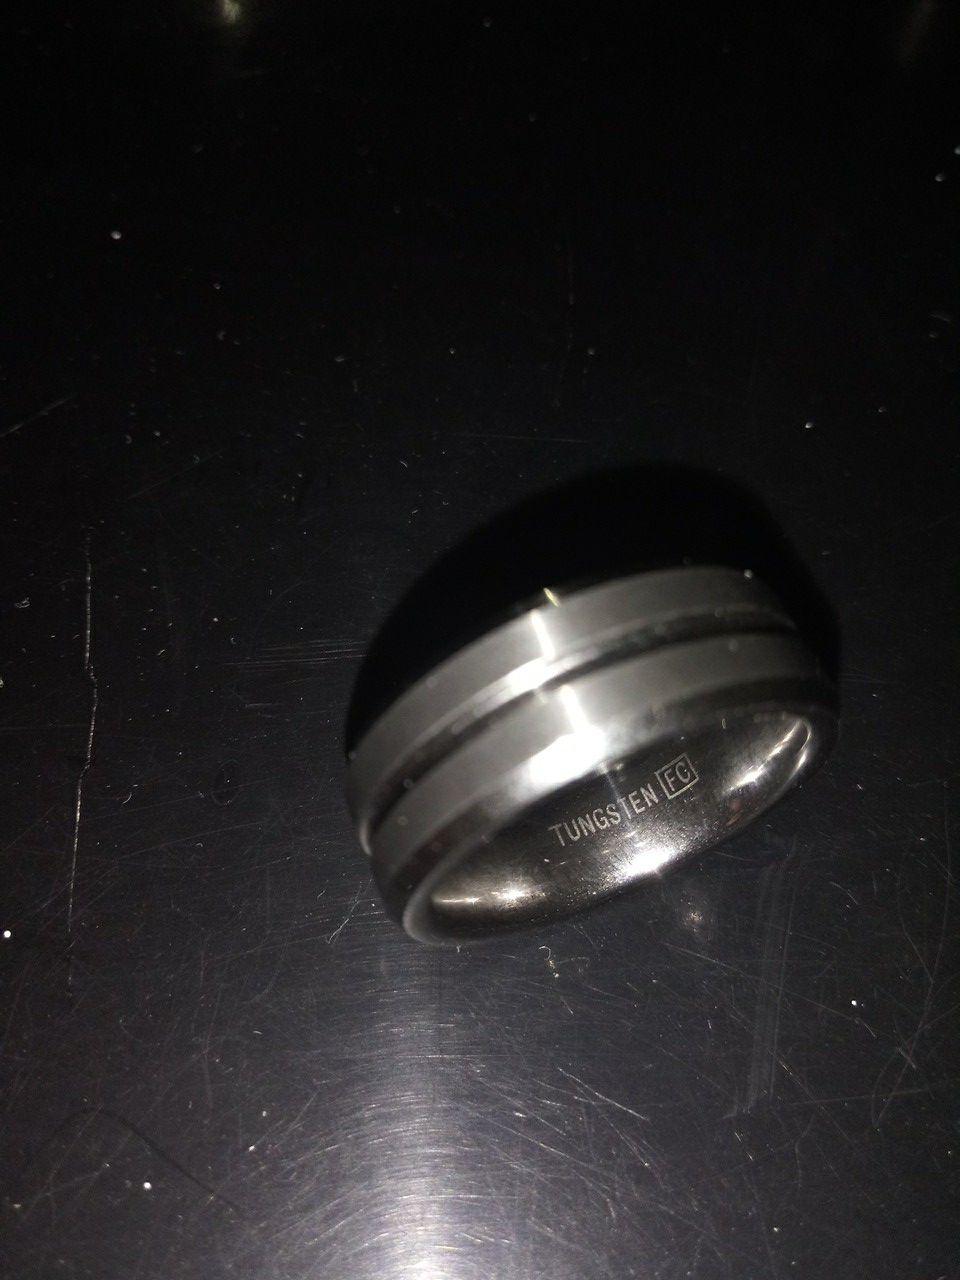 Unisex or Men's Tungsten Wedding Band. Silver Tone Matte Finish Tungsten Carbide Ring. Beveled Edge